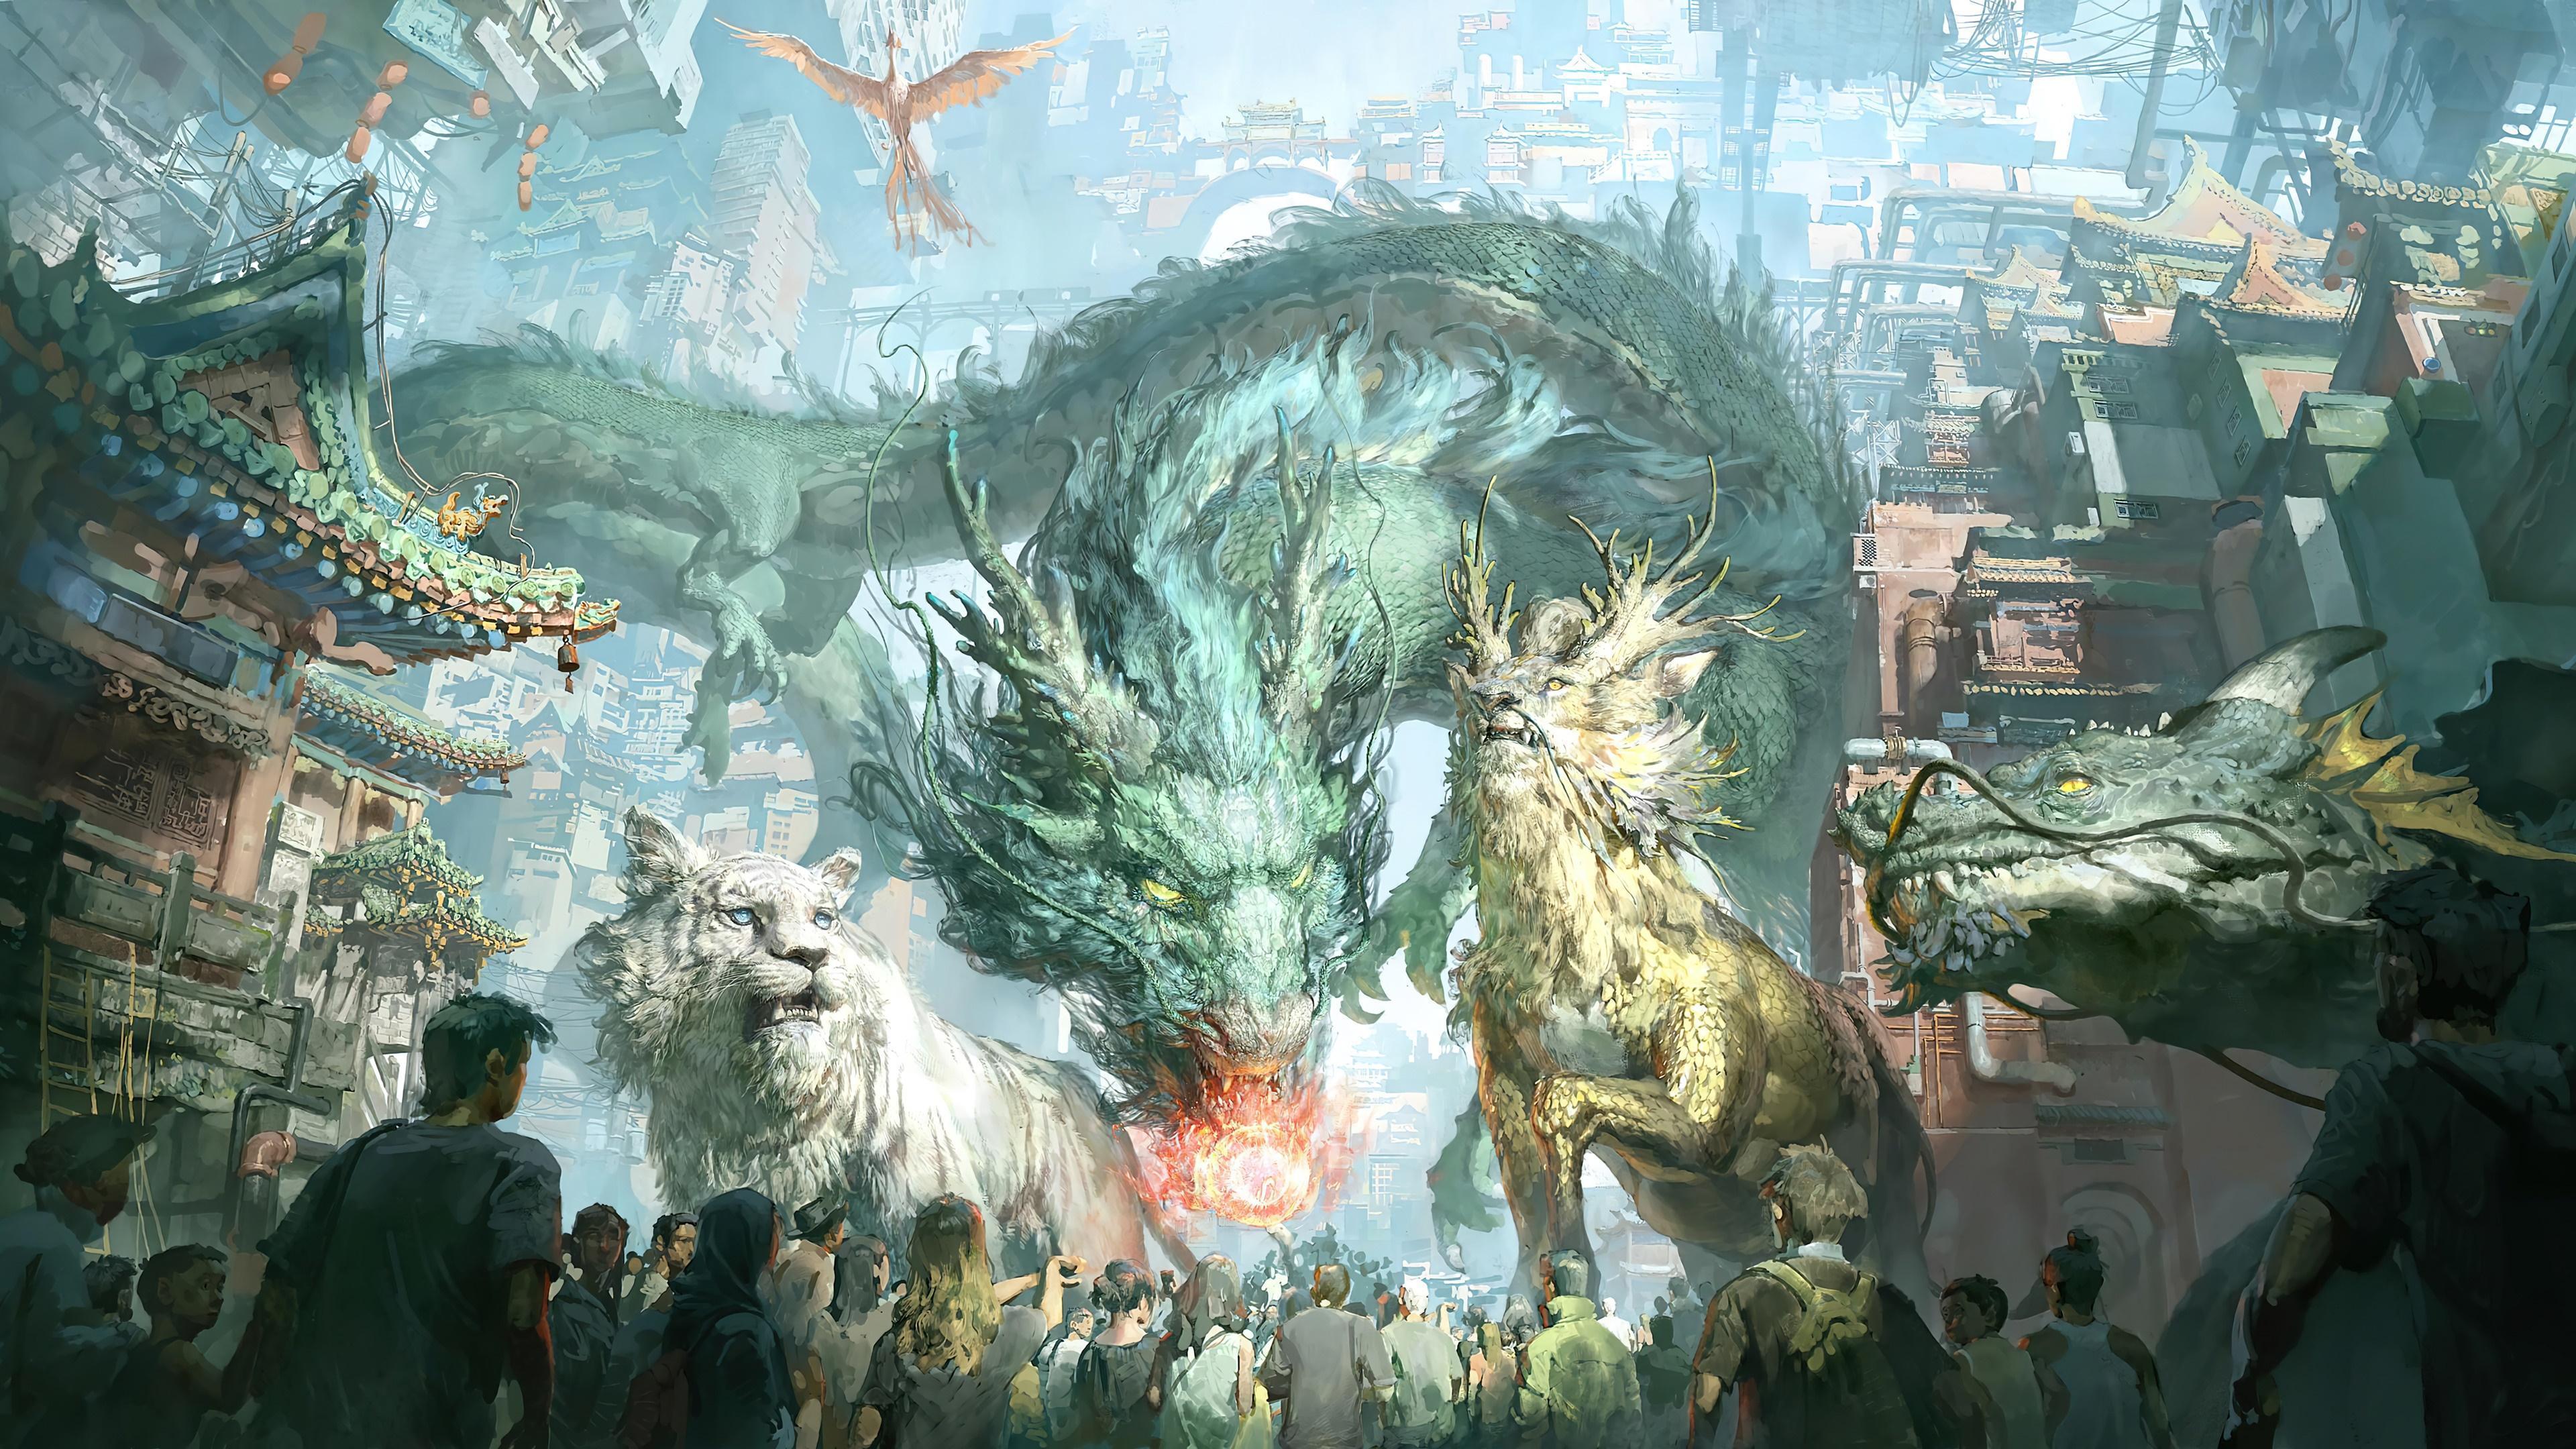 HD wallpaper, Dragon, 4K, Creatures, Art, City, Fantasy, Mythical